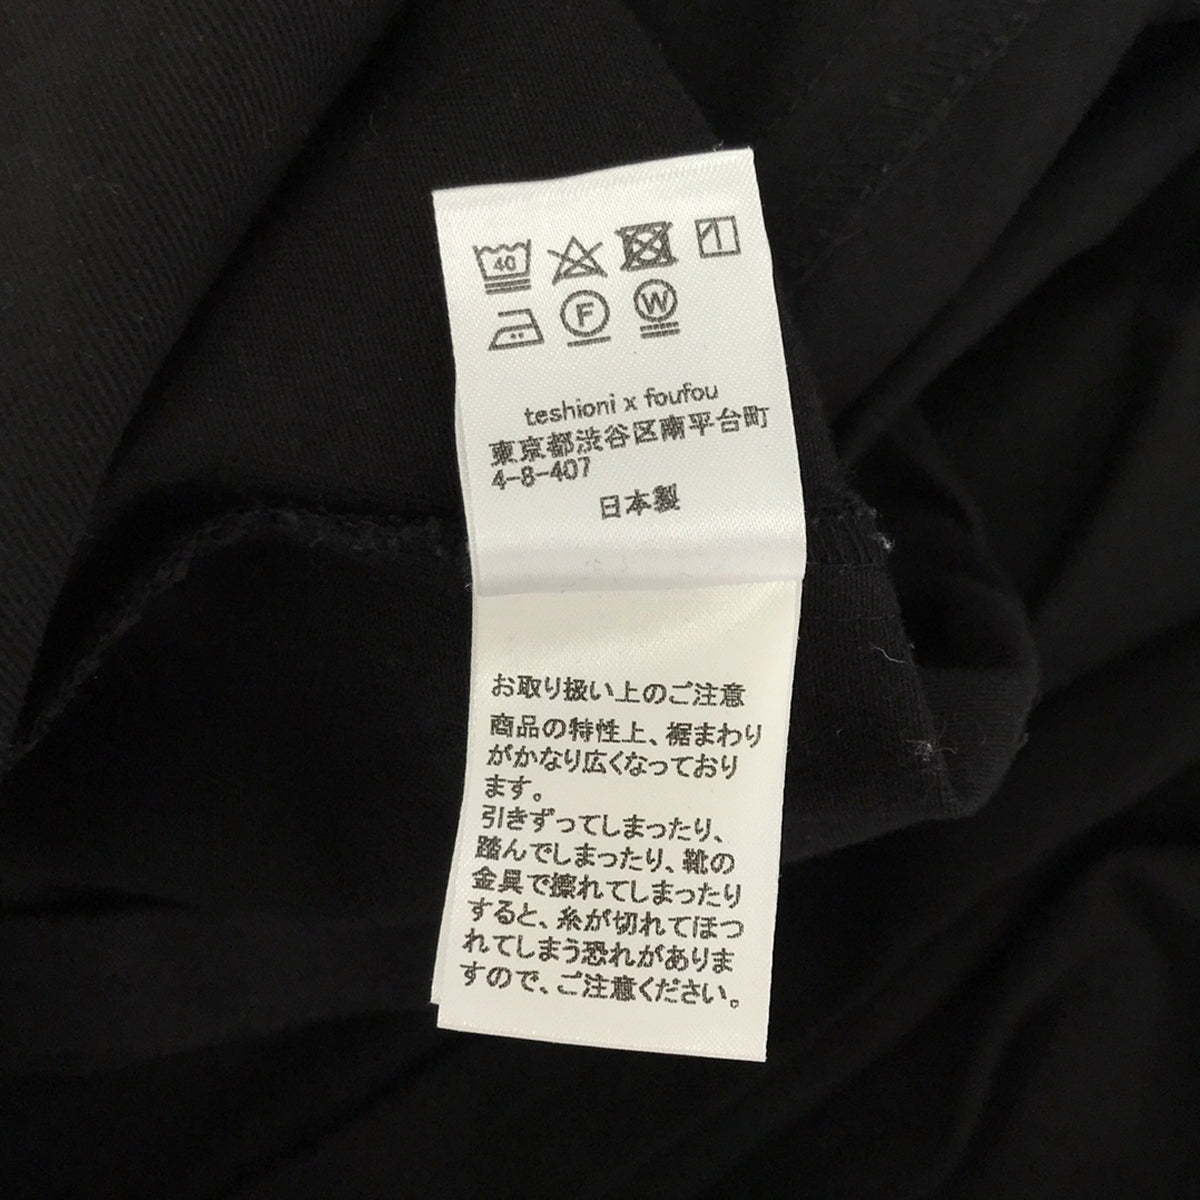 foufou / フーフー | 【THE DRESS #24】 raglan sleeve dress ワンピース | 0 | レディース